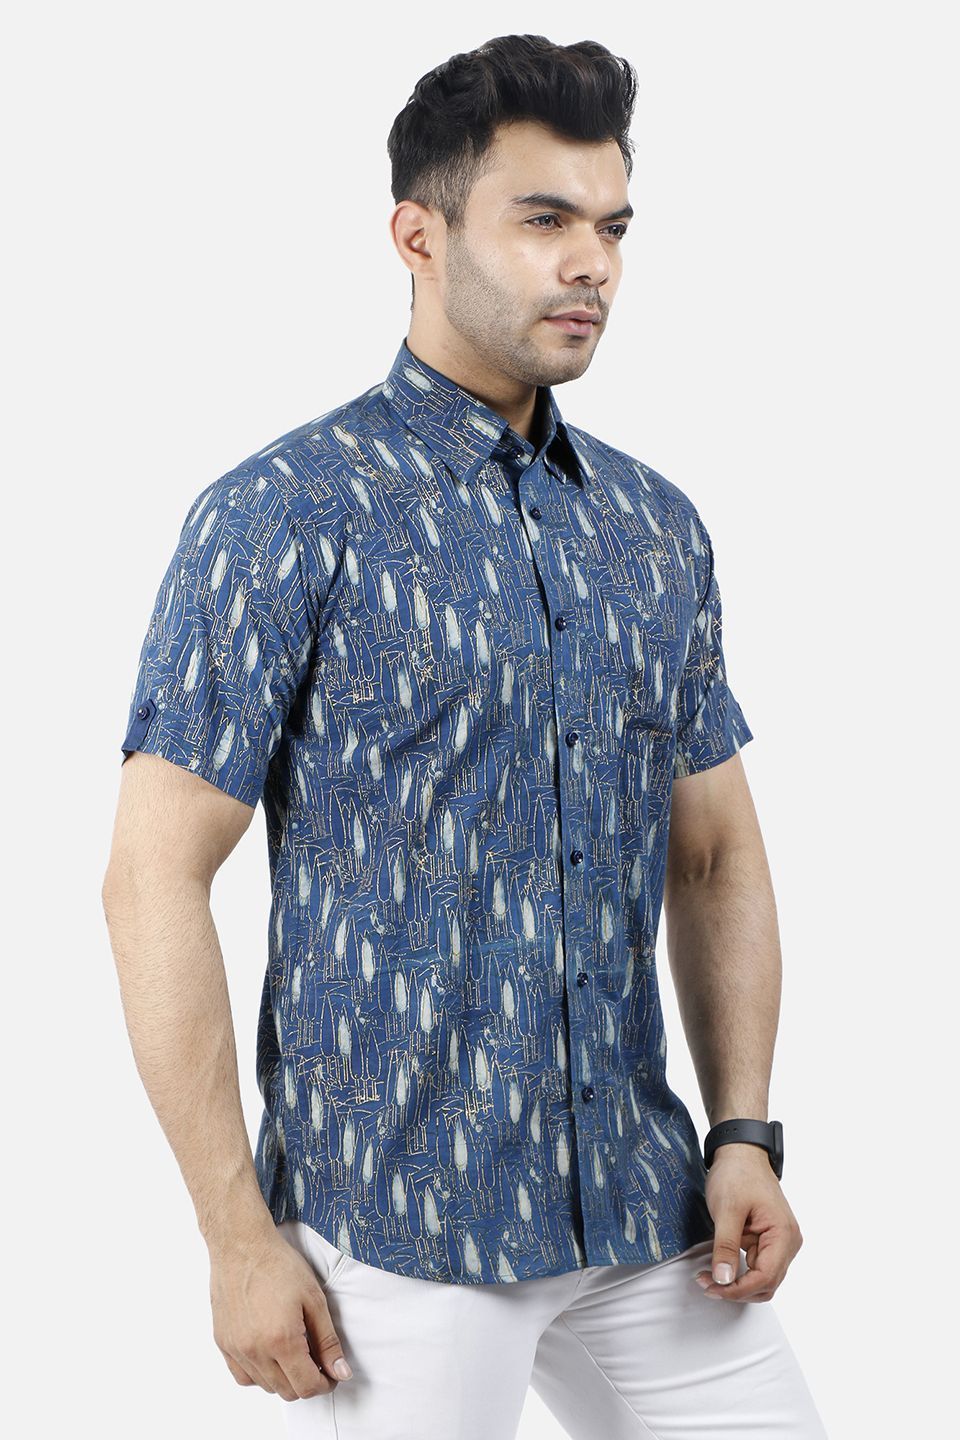 Jaipur 100% Cotton Blue Design Shirt